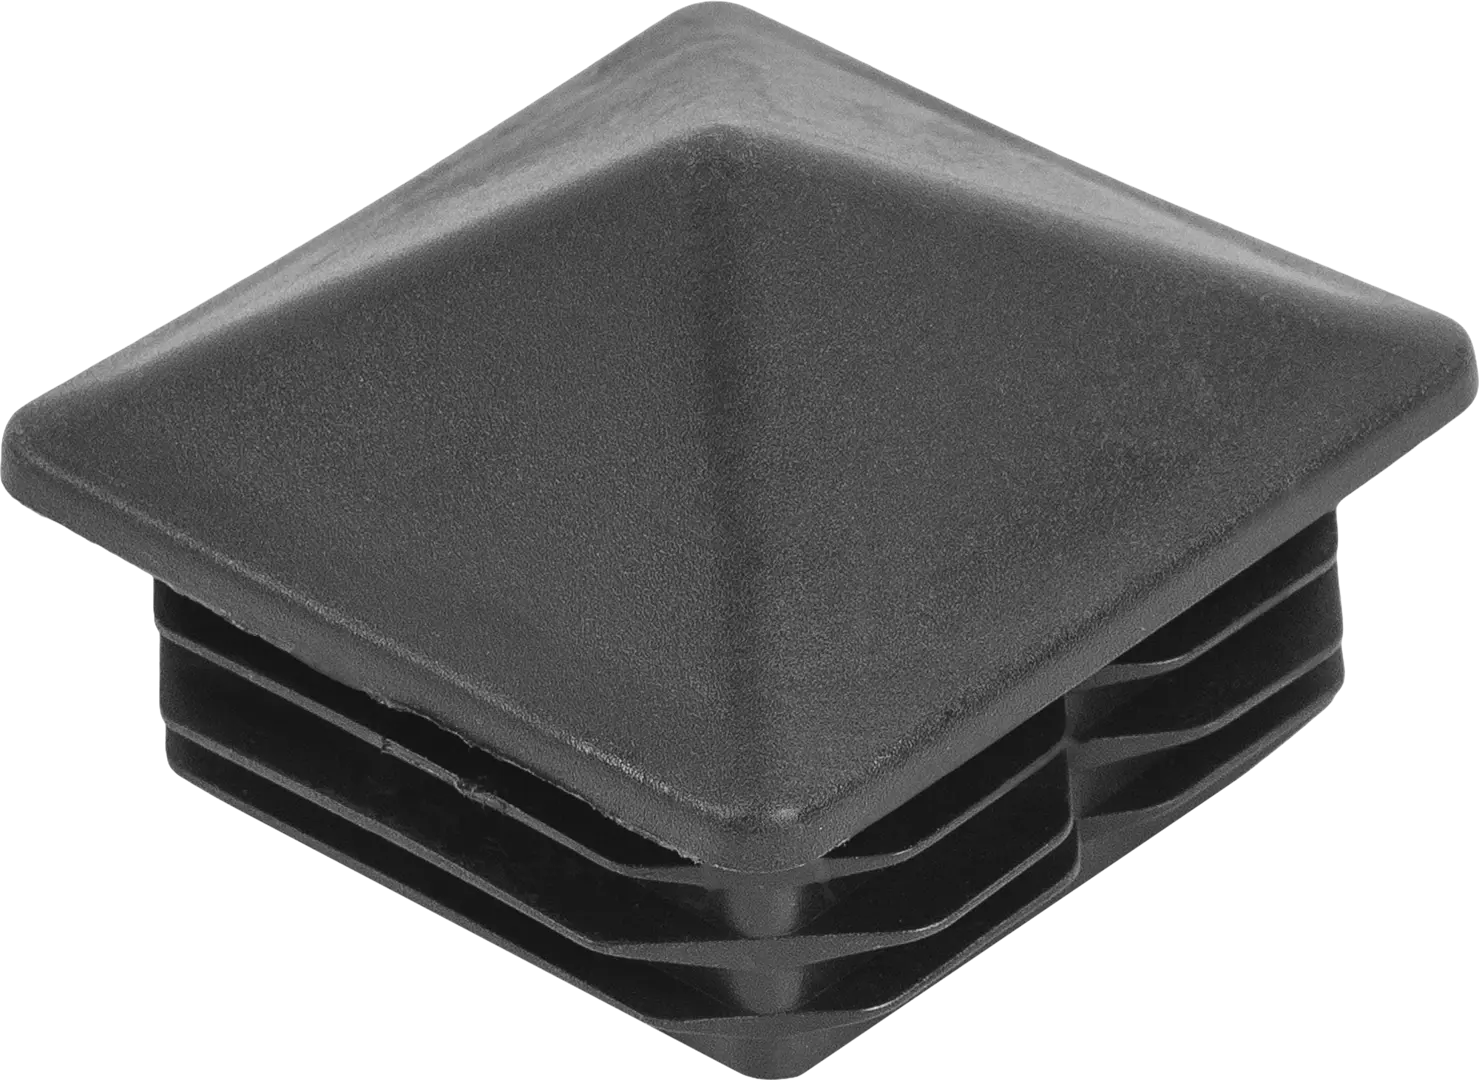 Заглушка пластиковая квадратная 60х60 мм декоративная, цвет черный, 4 шт. декоративная квадратная накладка под сувальдный ключ renz